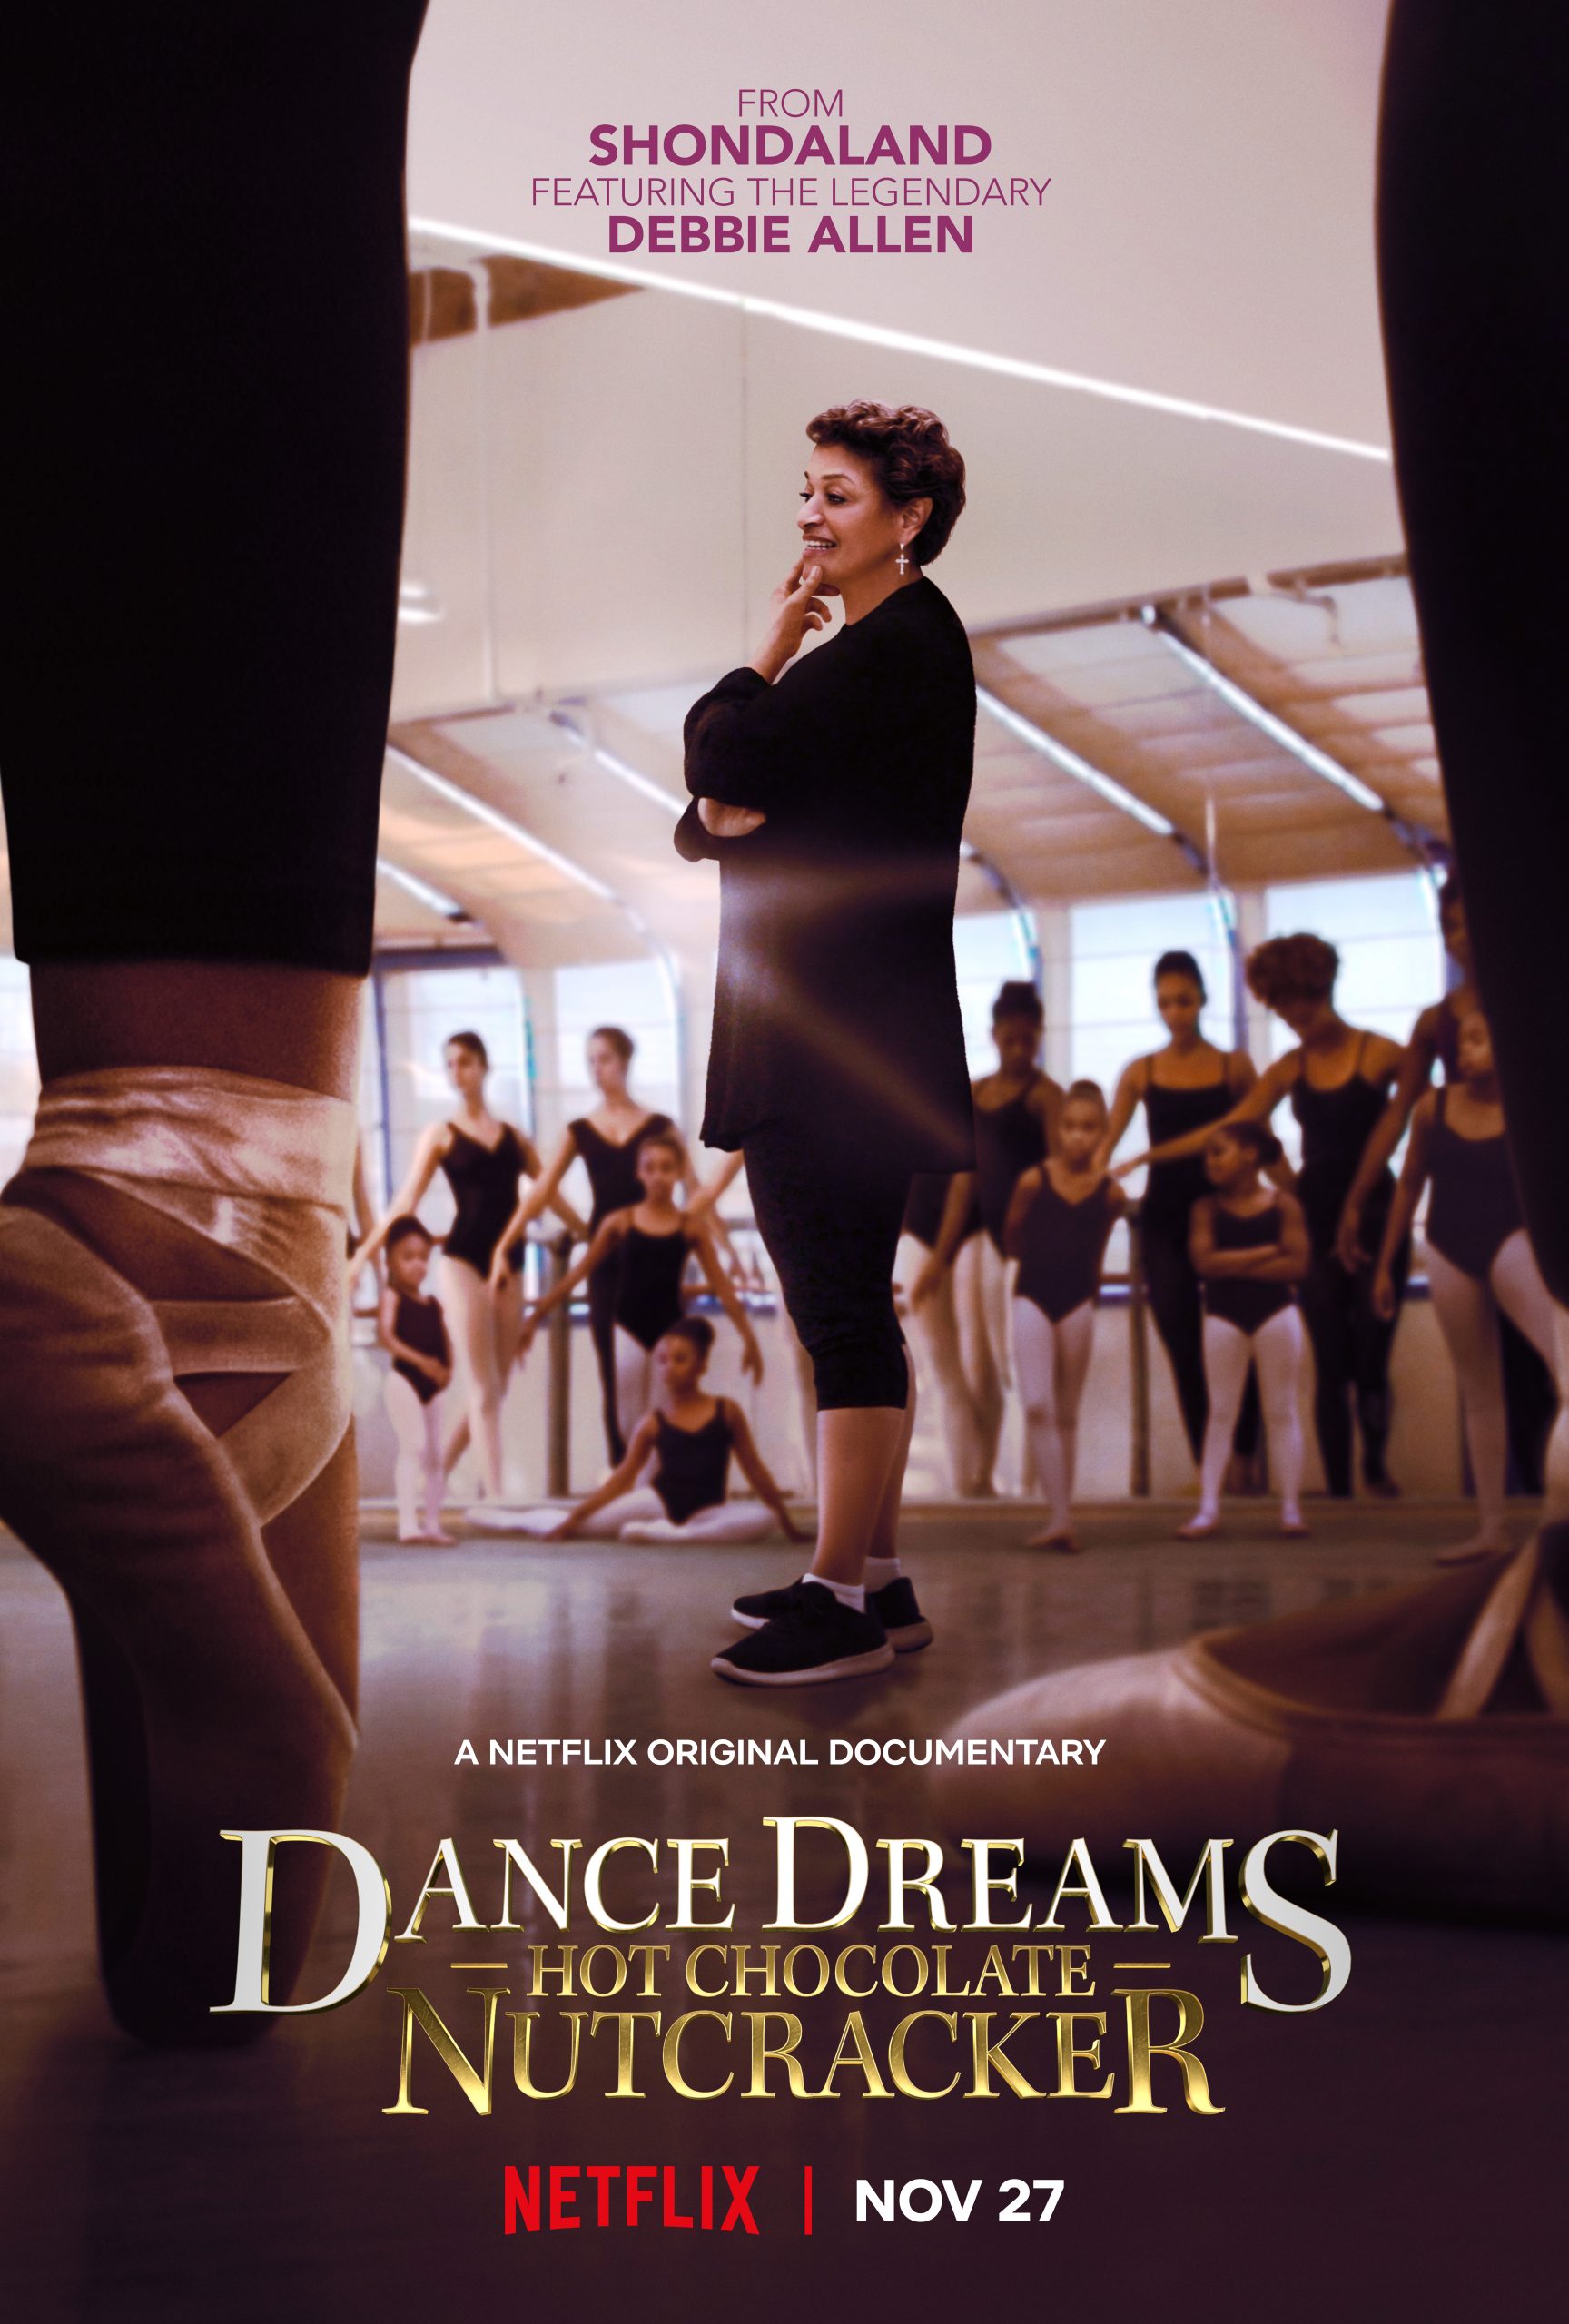 Netflix’s Dance Dreams: Hot Chocolate Nutcracker Starring Debbie Allen